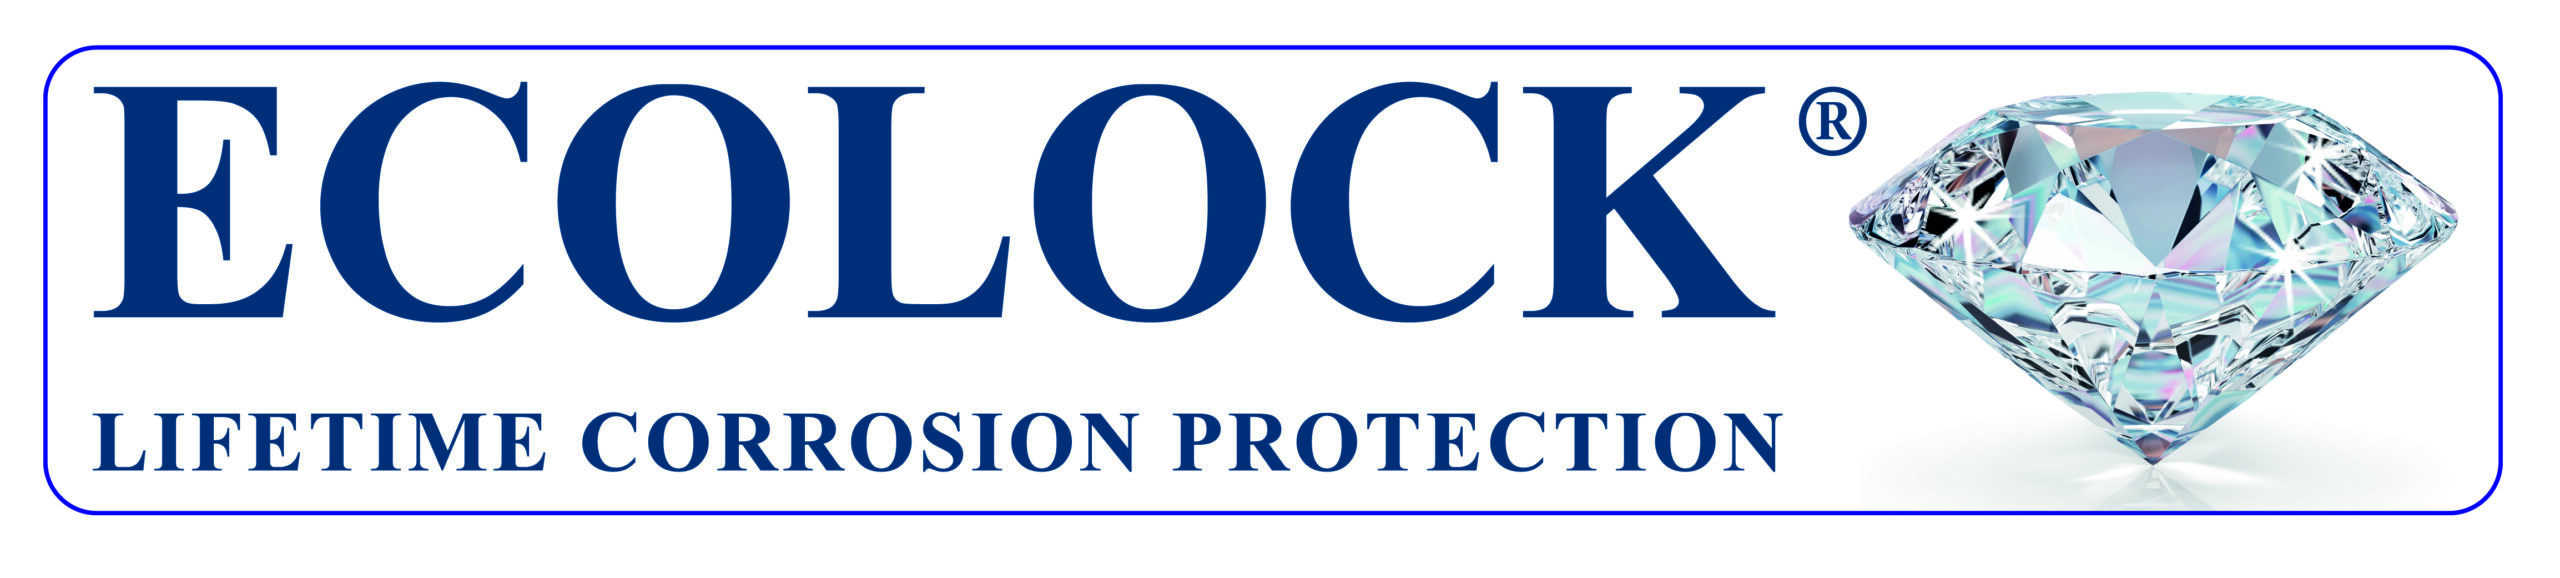 Ecolock logo